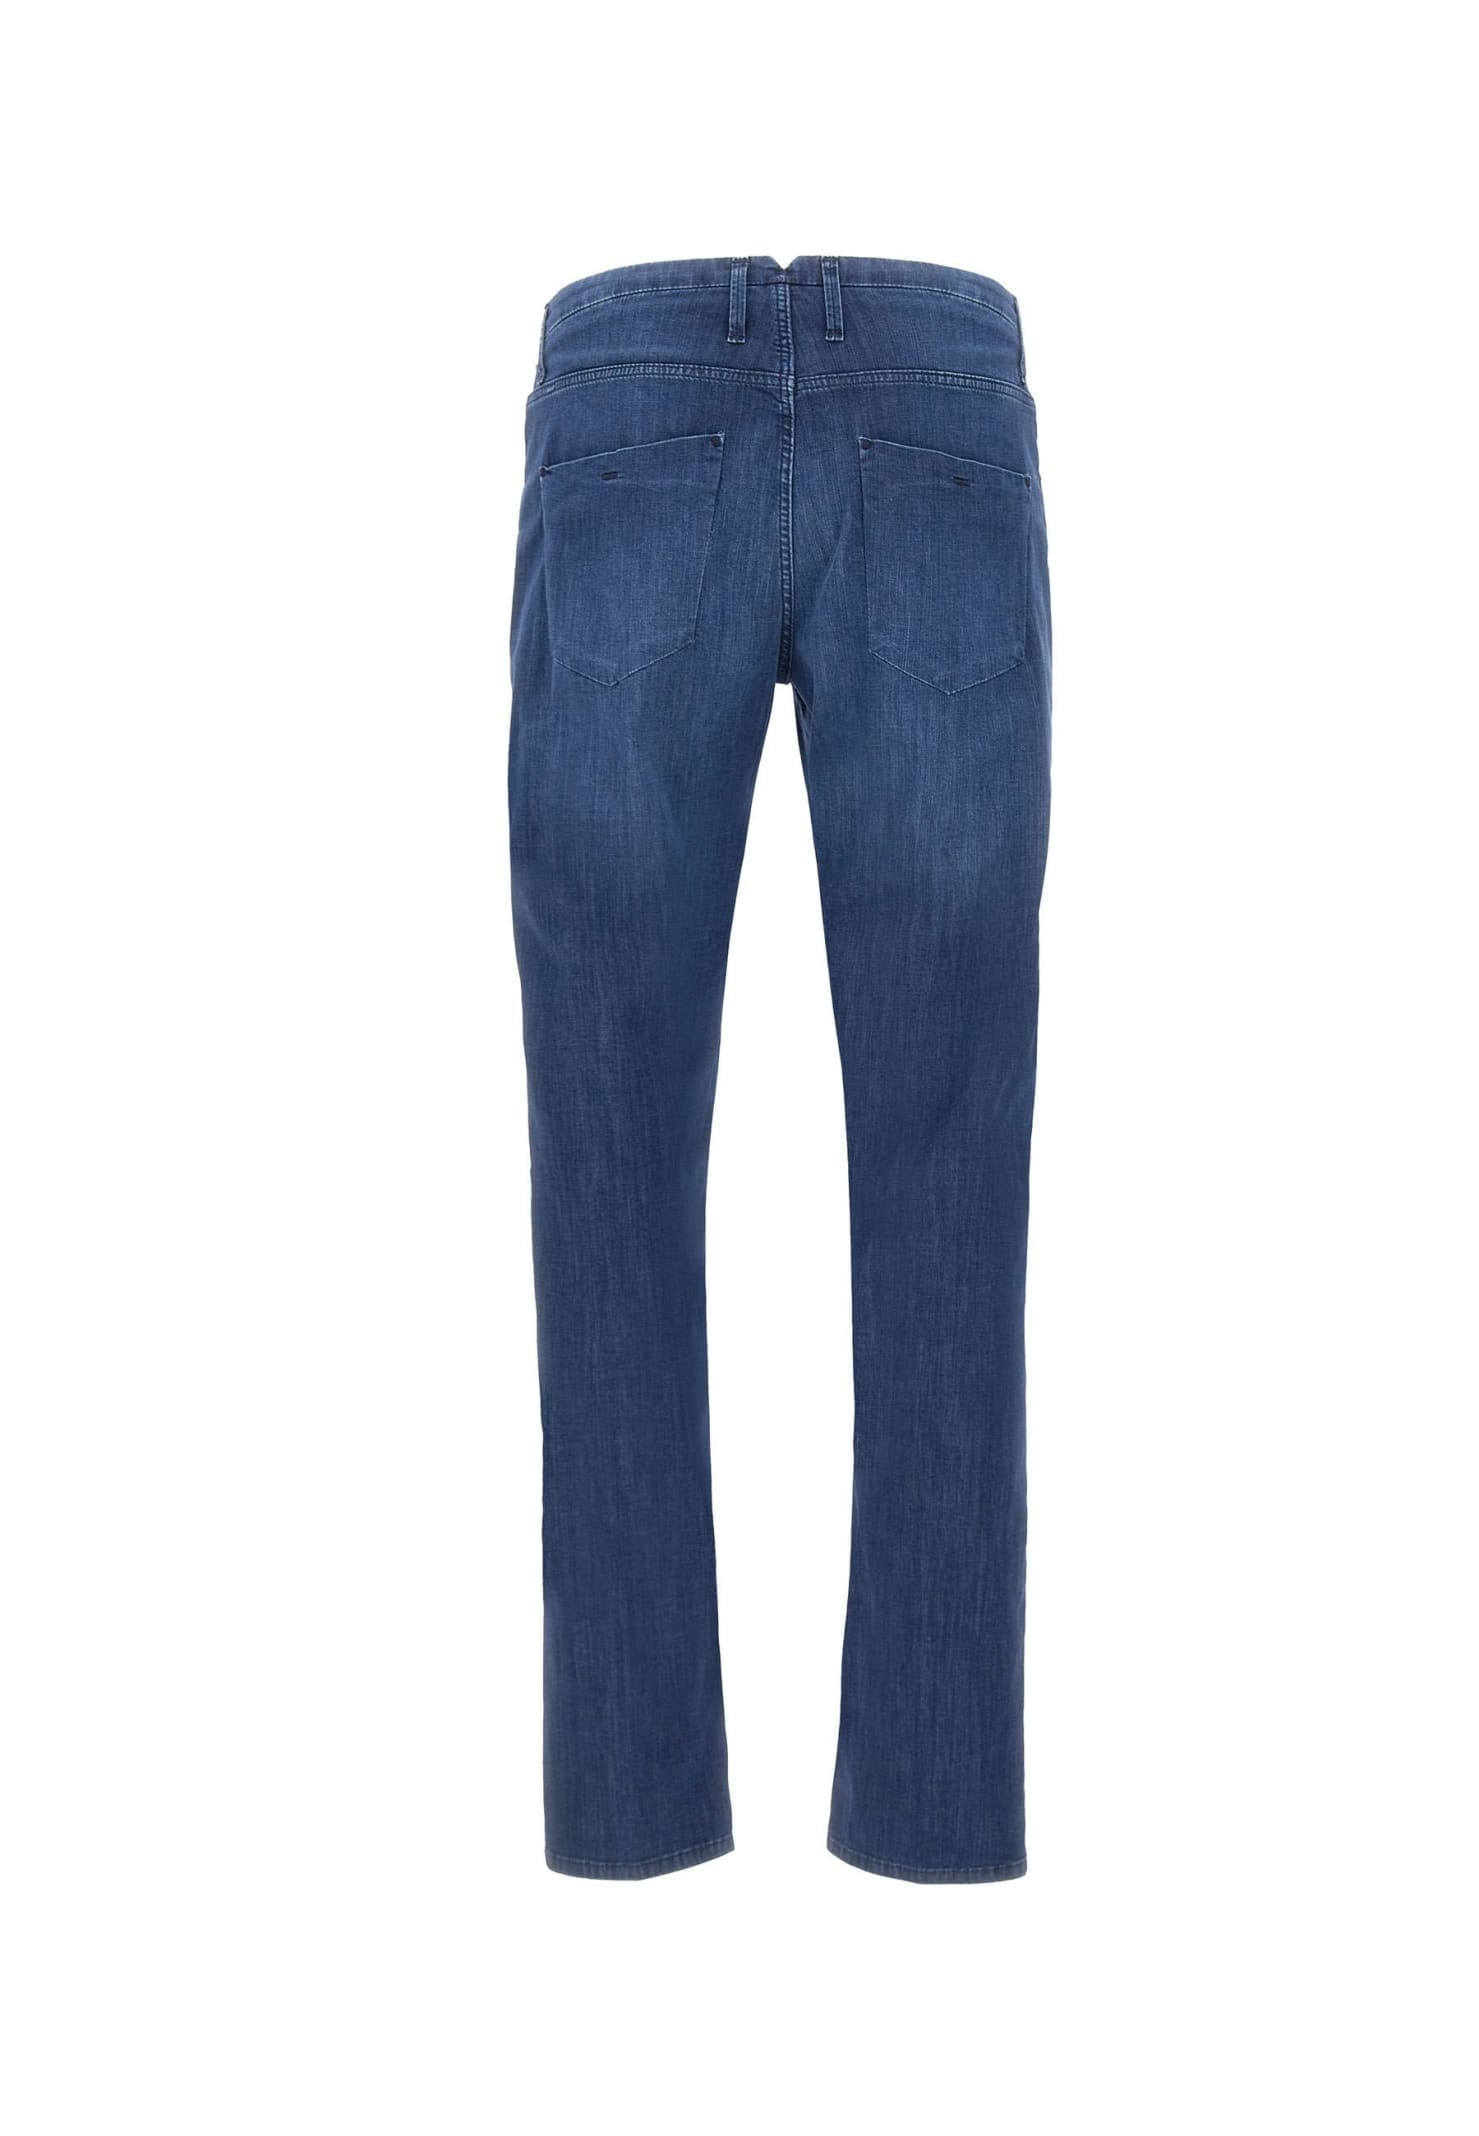 Shop Incotex Blue Division Tailor Made Jeans